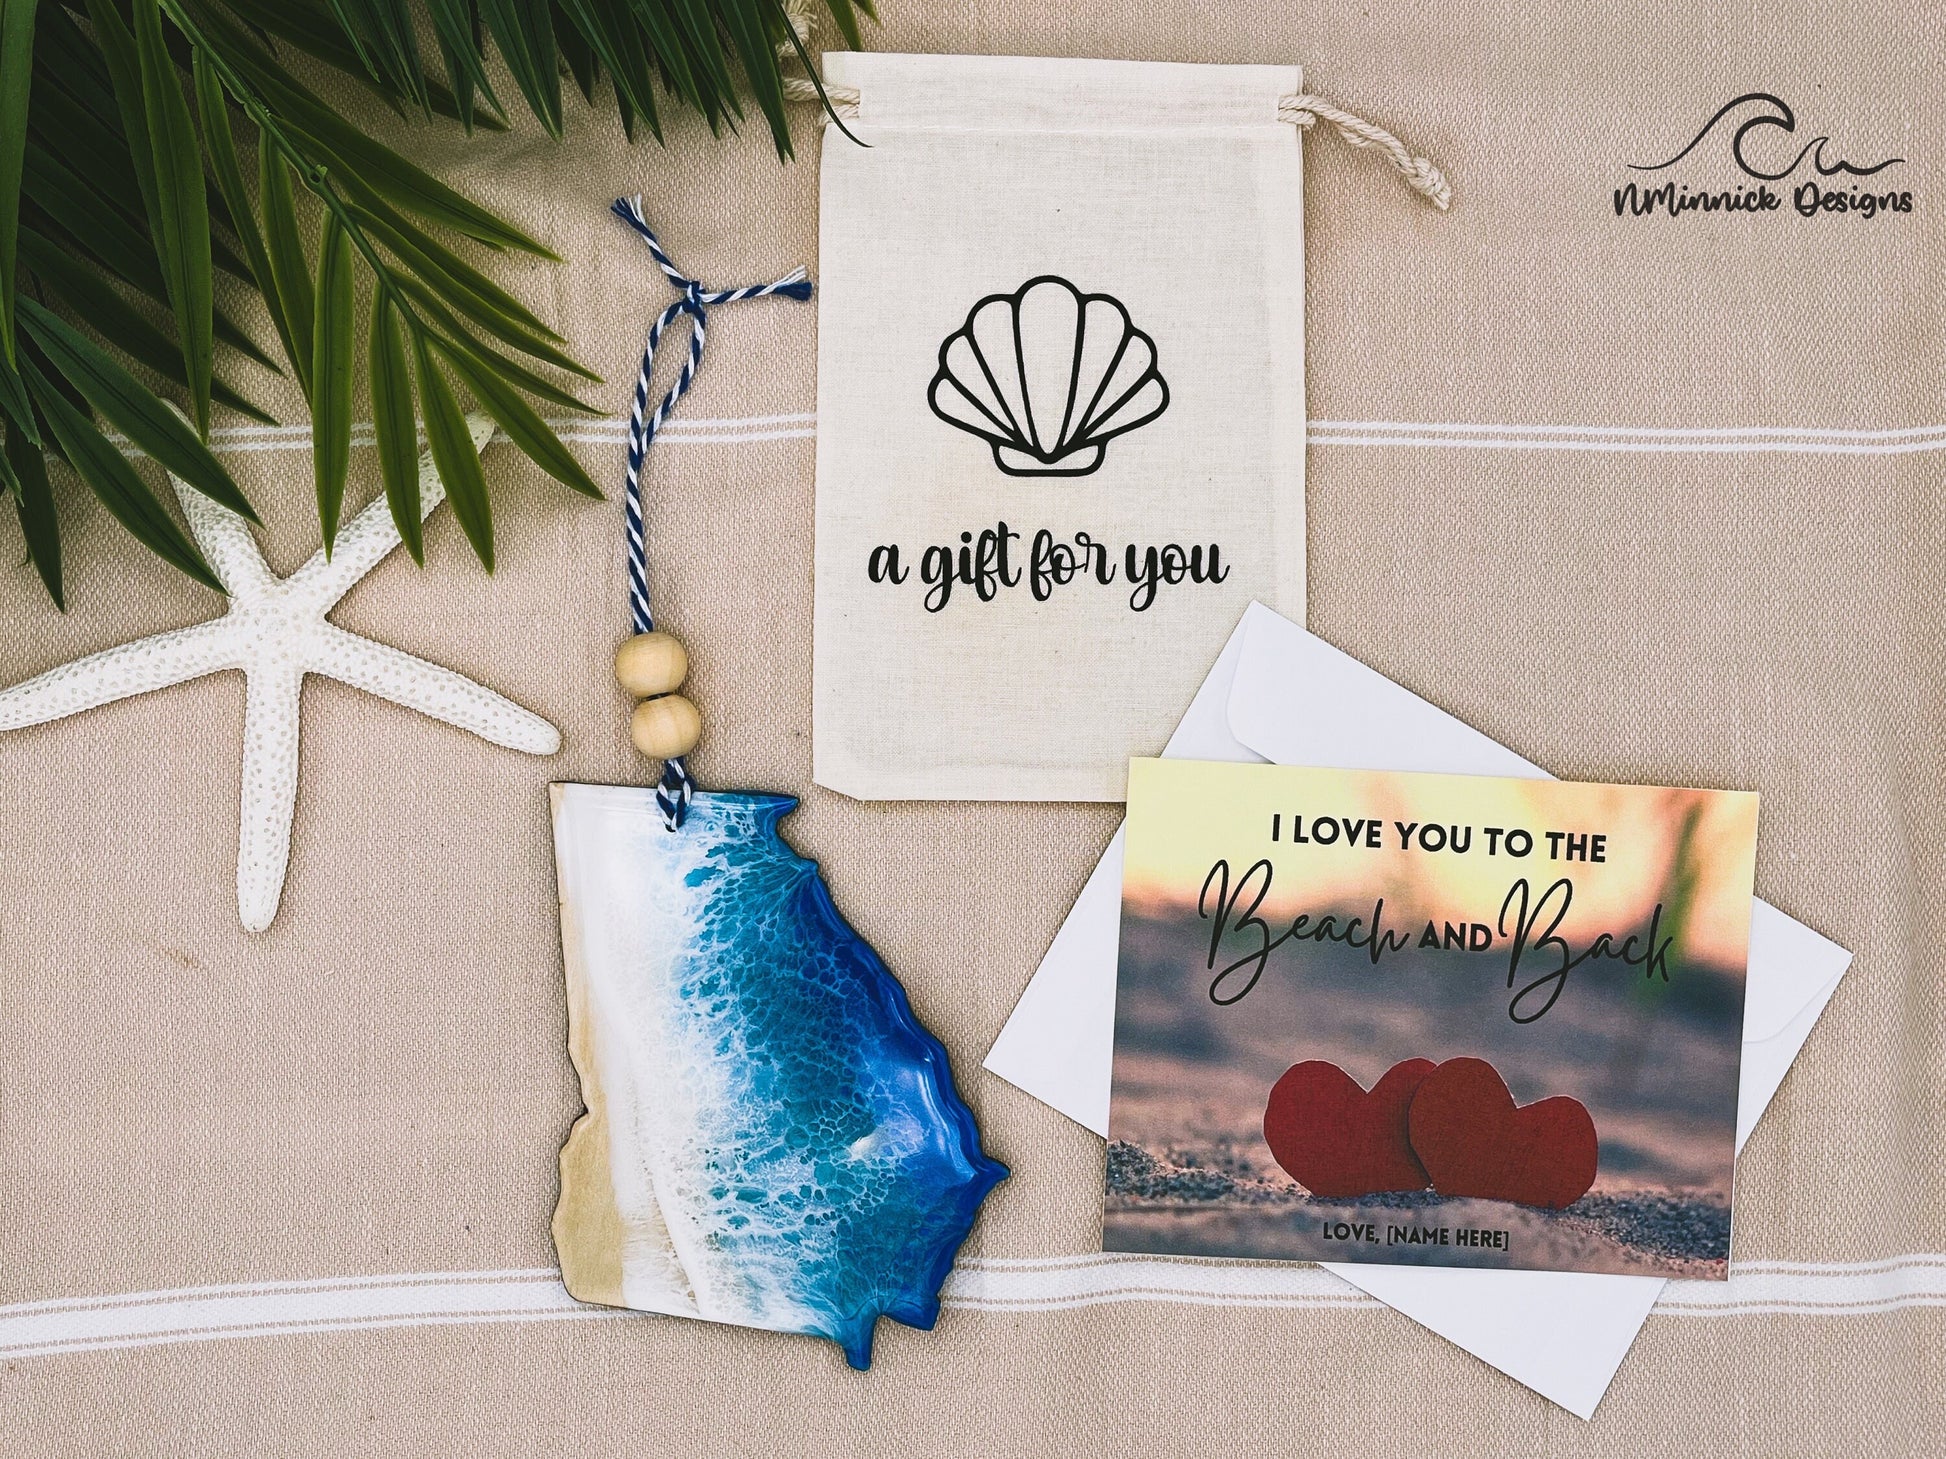 Georgia Ocean Ornament Gift Box with Keepsake Ornament Gift Bag and Custom Card